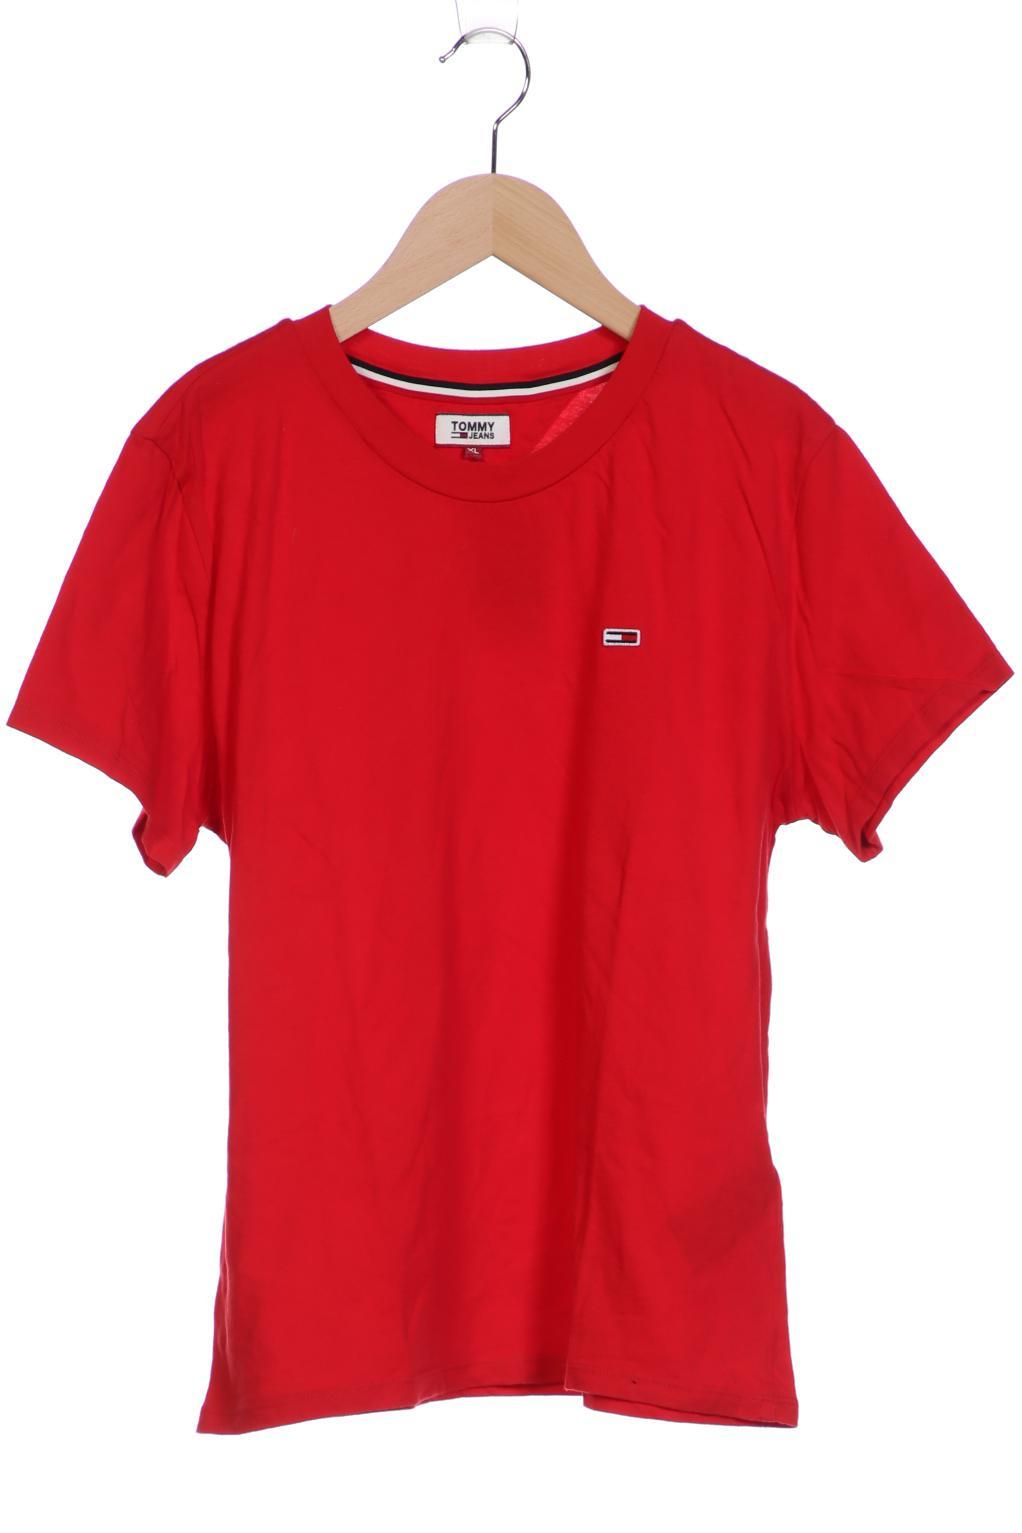 Tommy Jeans Damen T-Shirt, rot, Gr. 44 von Tommy Jeans